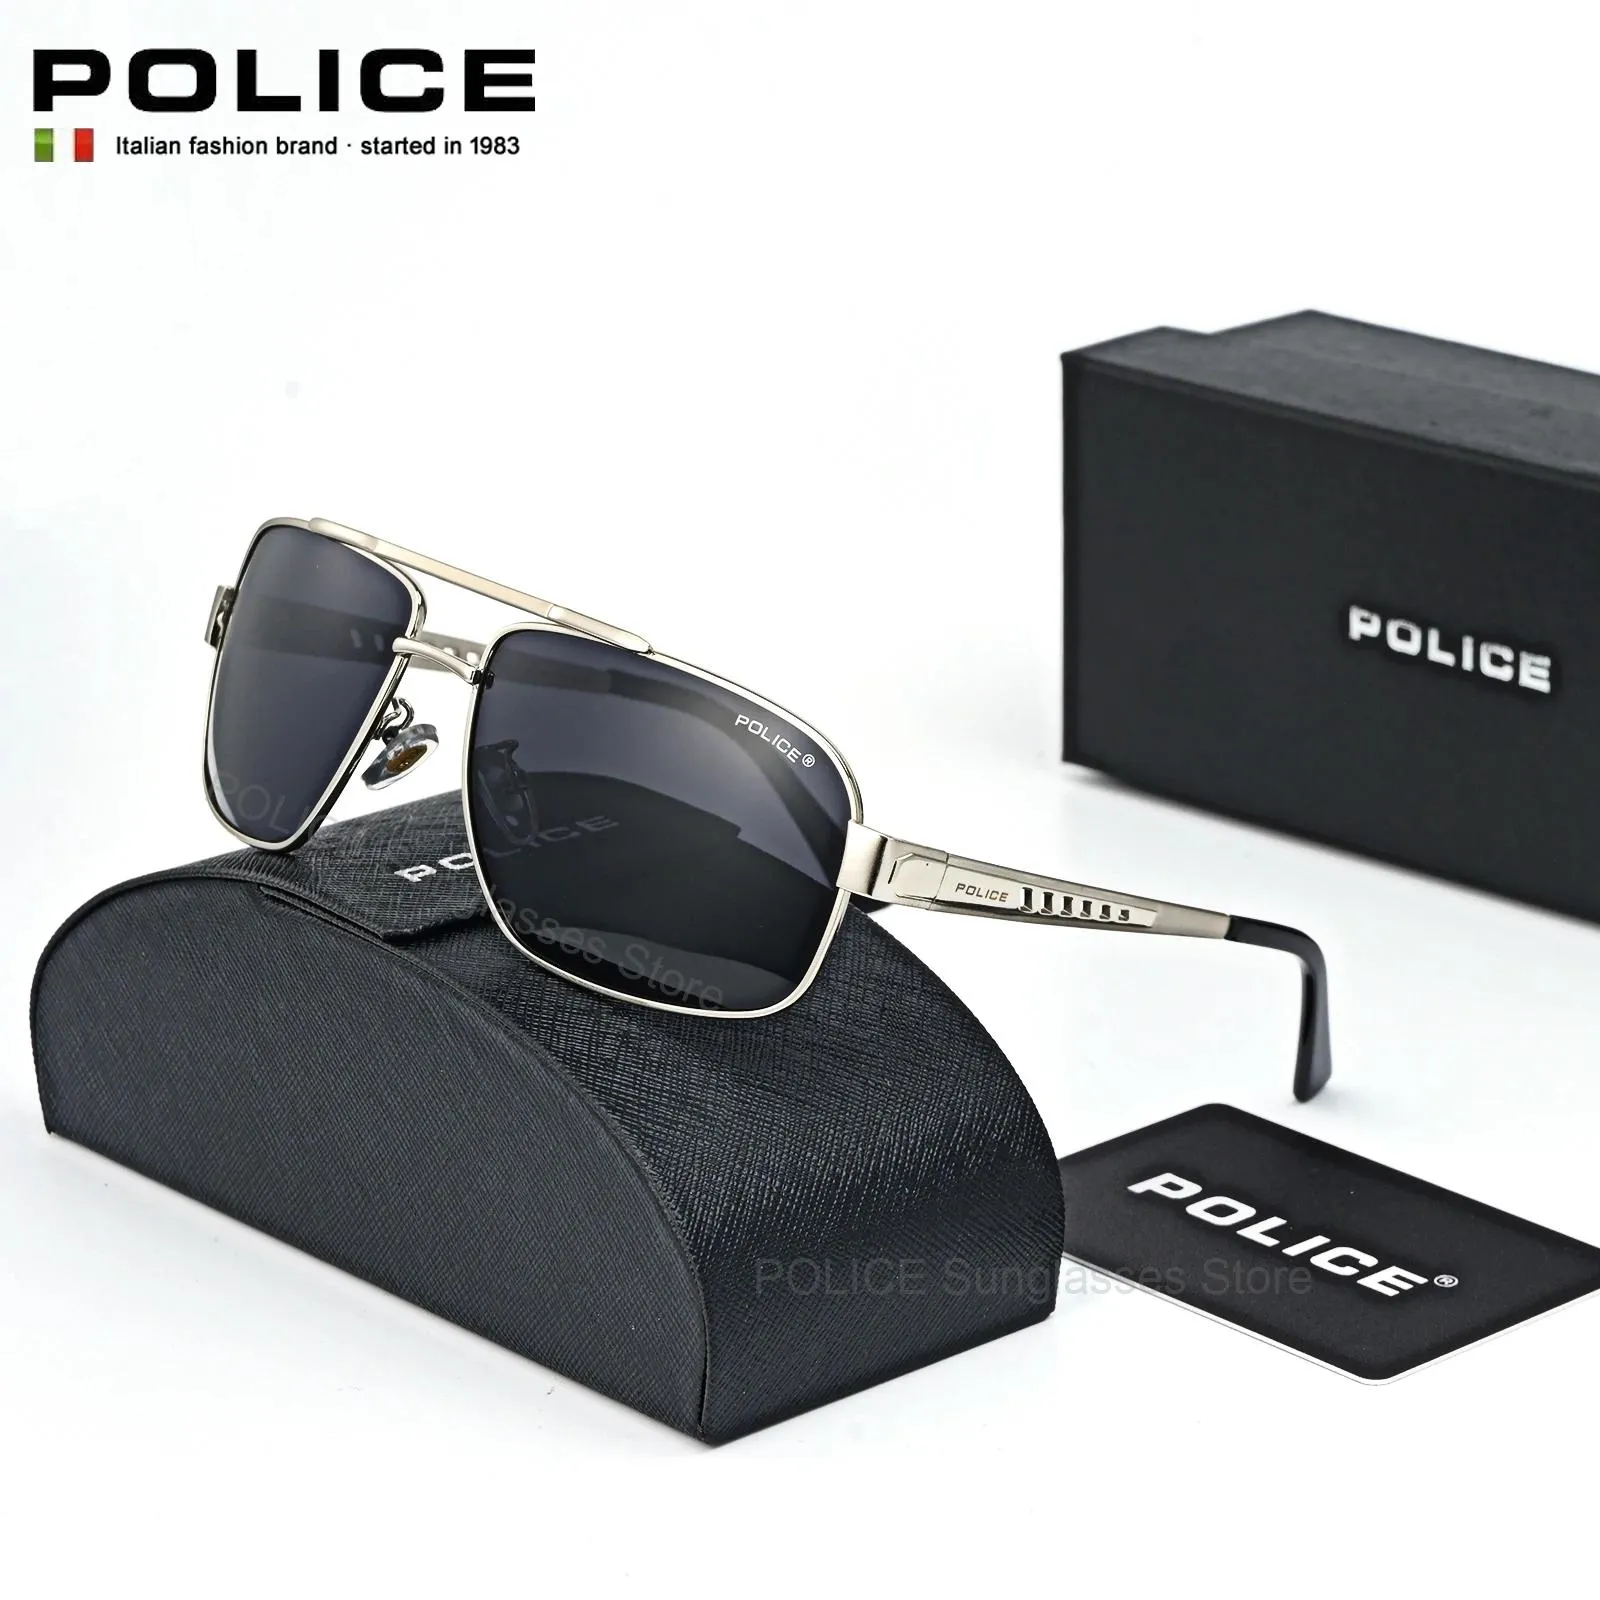 Sunglasses Police Brand Uv400 Sunglasses Fashion Trend Men Polarized Brand  Design Eyewear Male Antiglare Driving Glasses From Ucuoh, $16.89